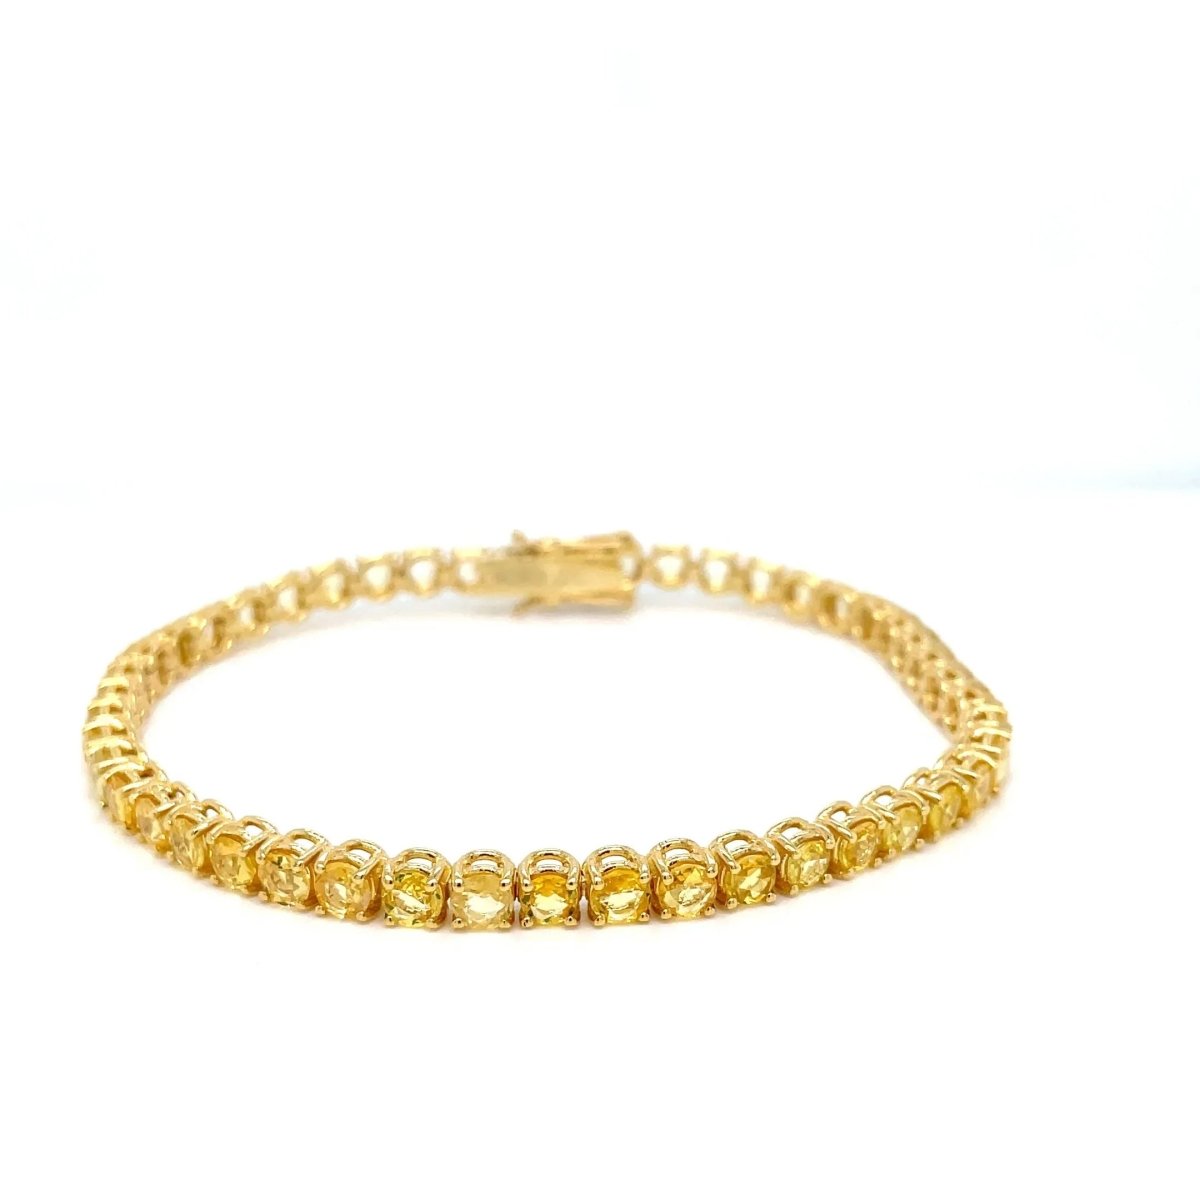 10 Carat Natural Yellow Sapphire Gold Tennis Bracelet - Castafiore